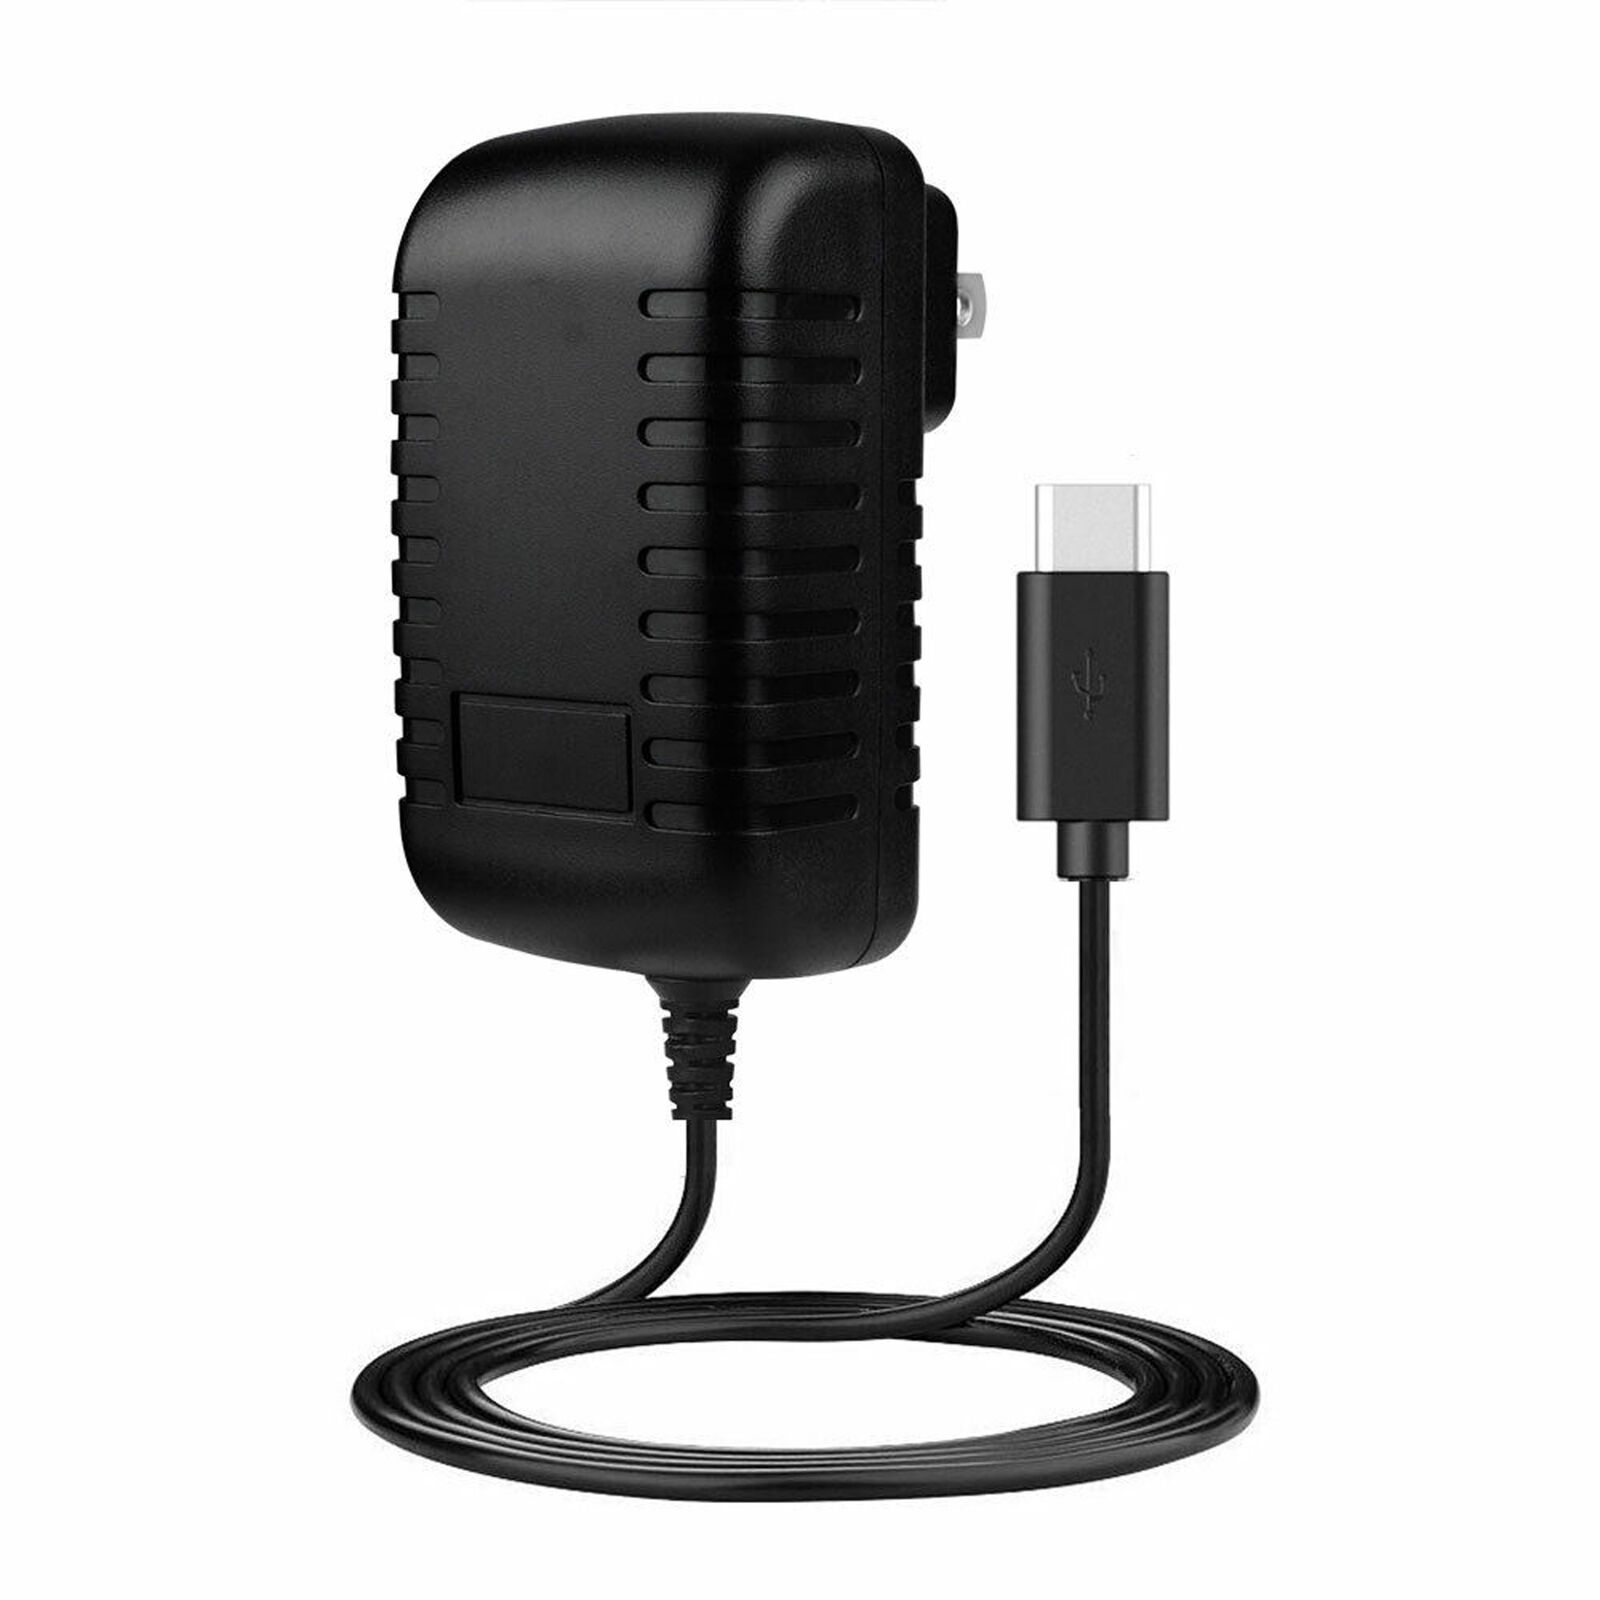 AC Adapter USB Charger For Pulseroll Ignite Mini PMG007 MG007 Heated Massage Gun US Adapter Mall Platinum Guarantee : ( - Click Image to Close